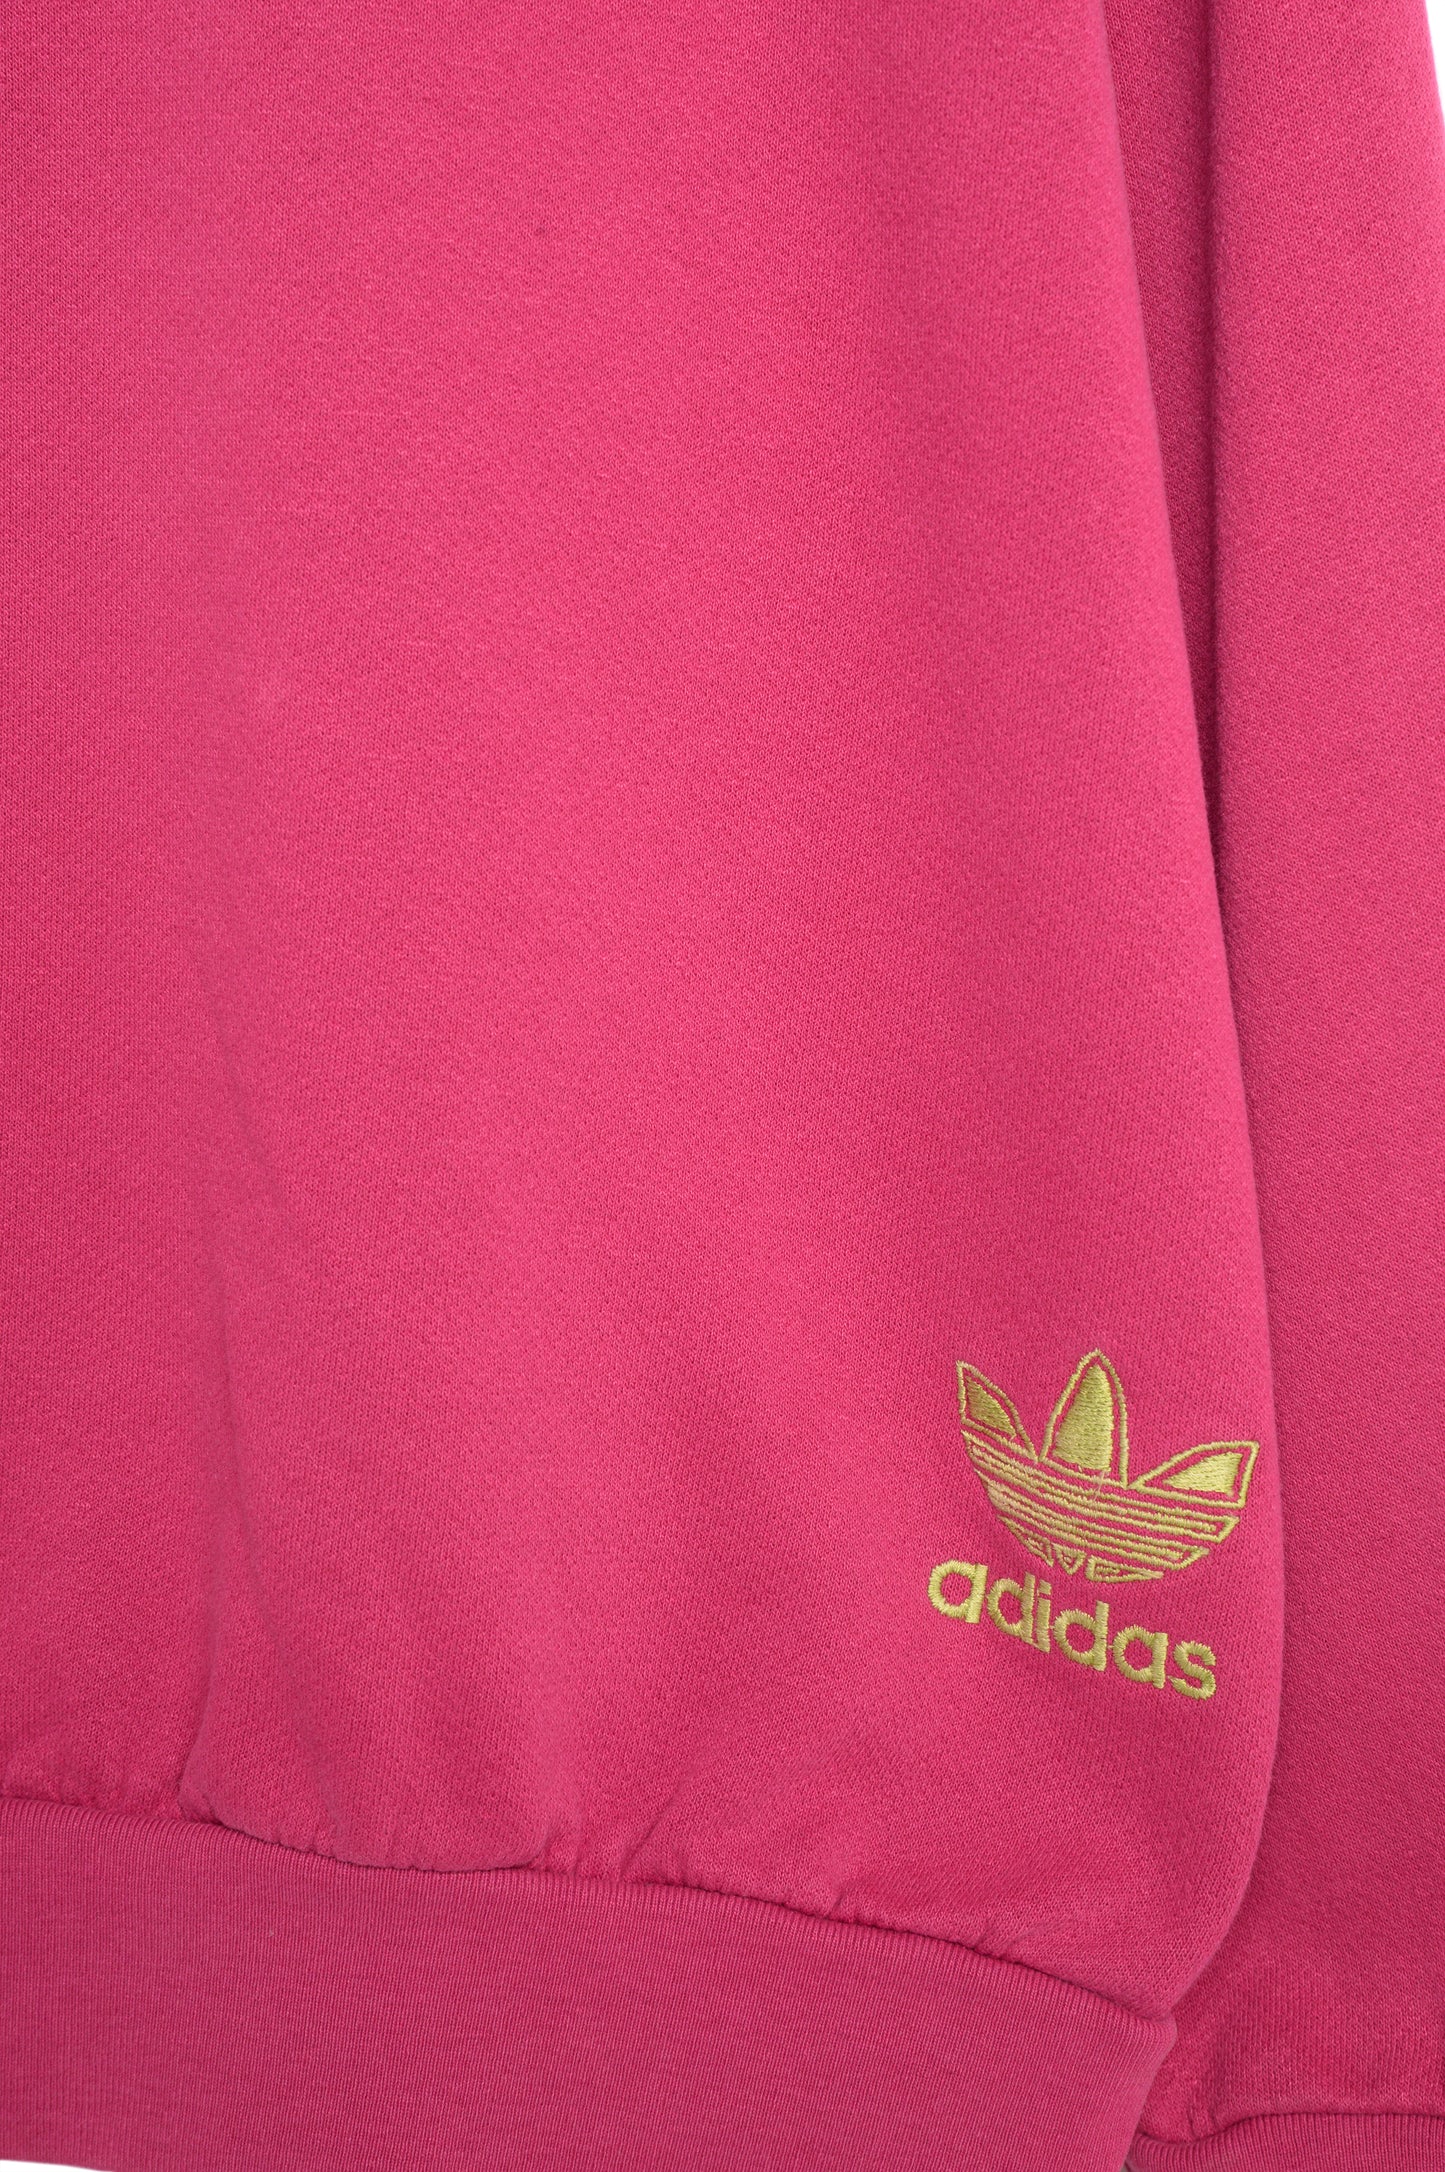 1980s Adidas Trefoil Sweatshirt USA